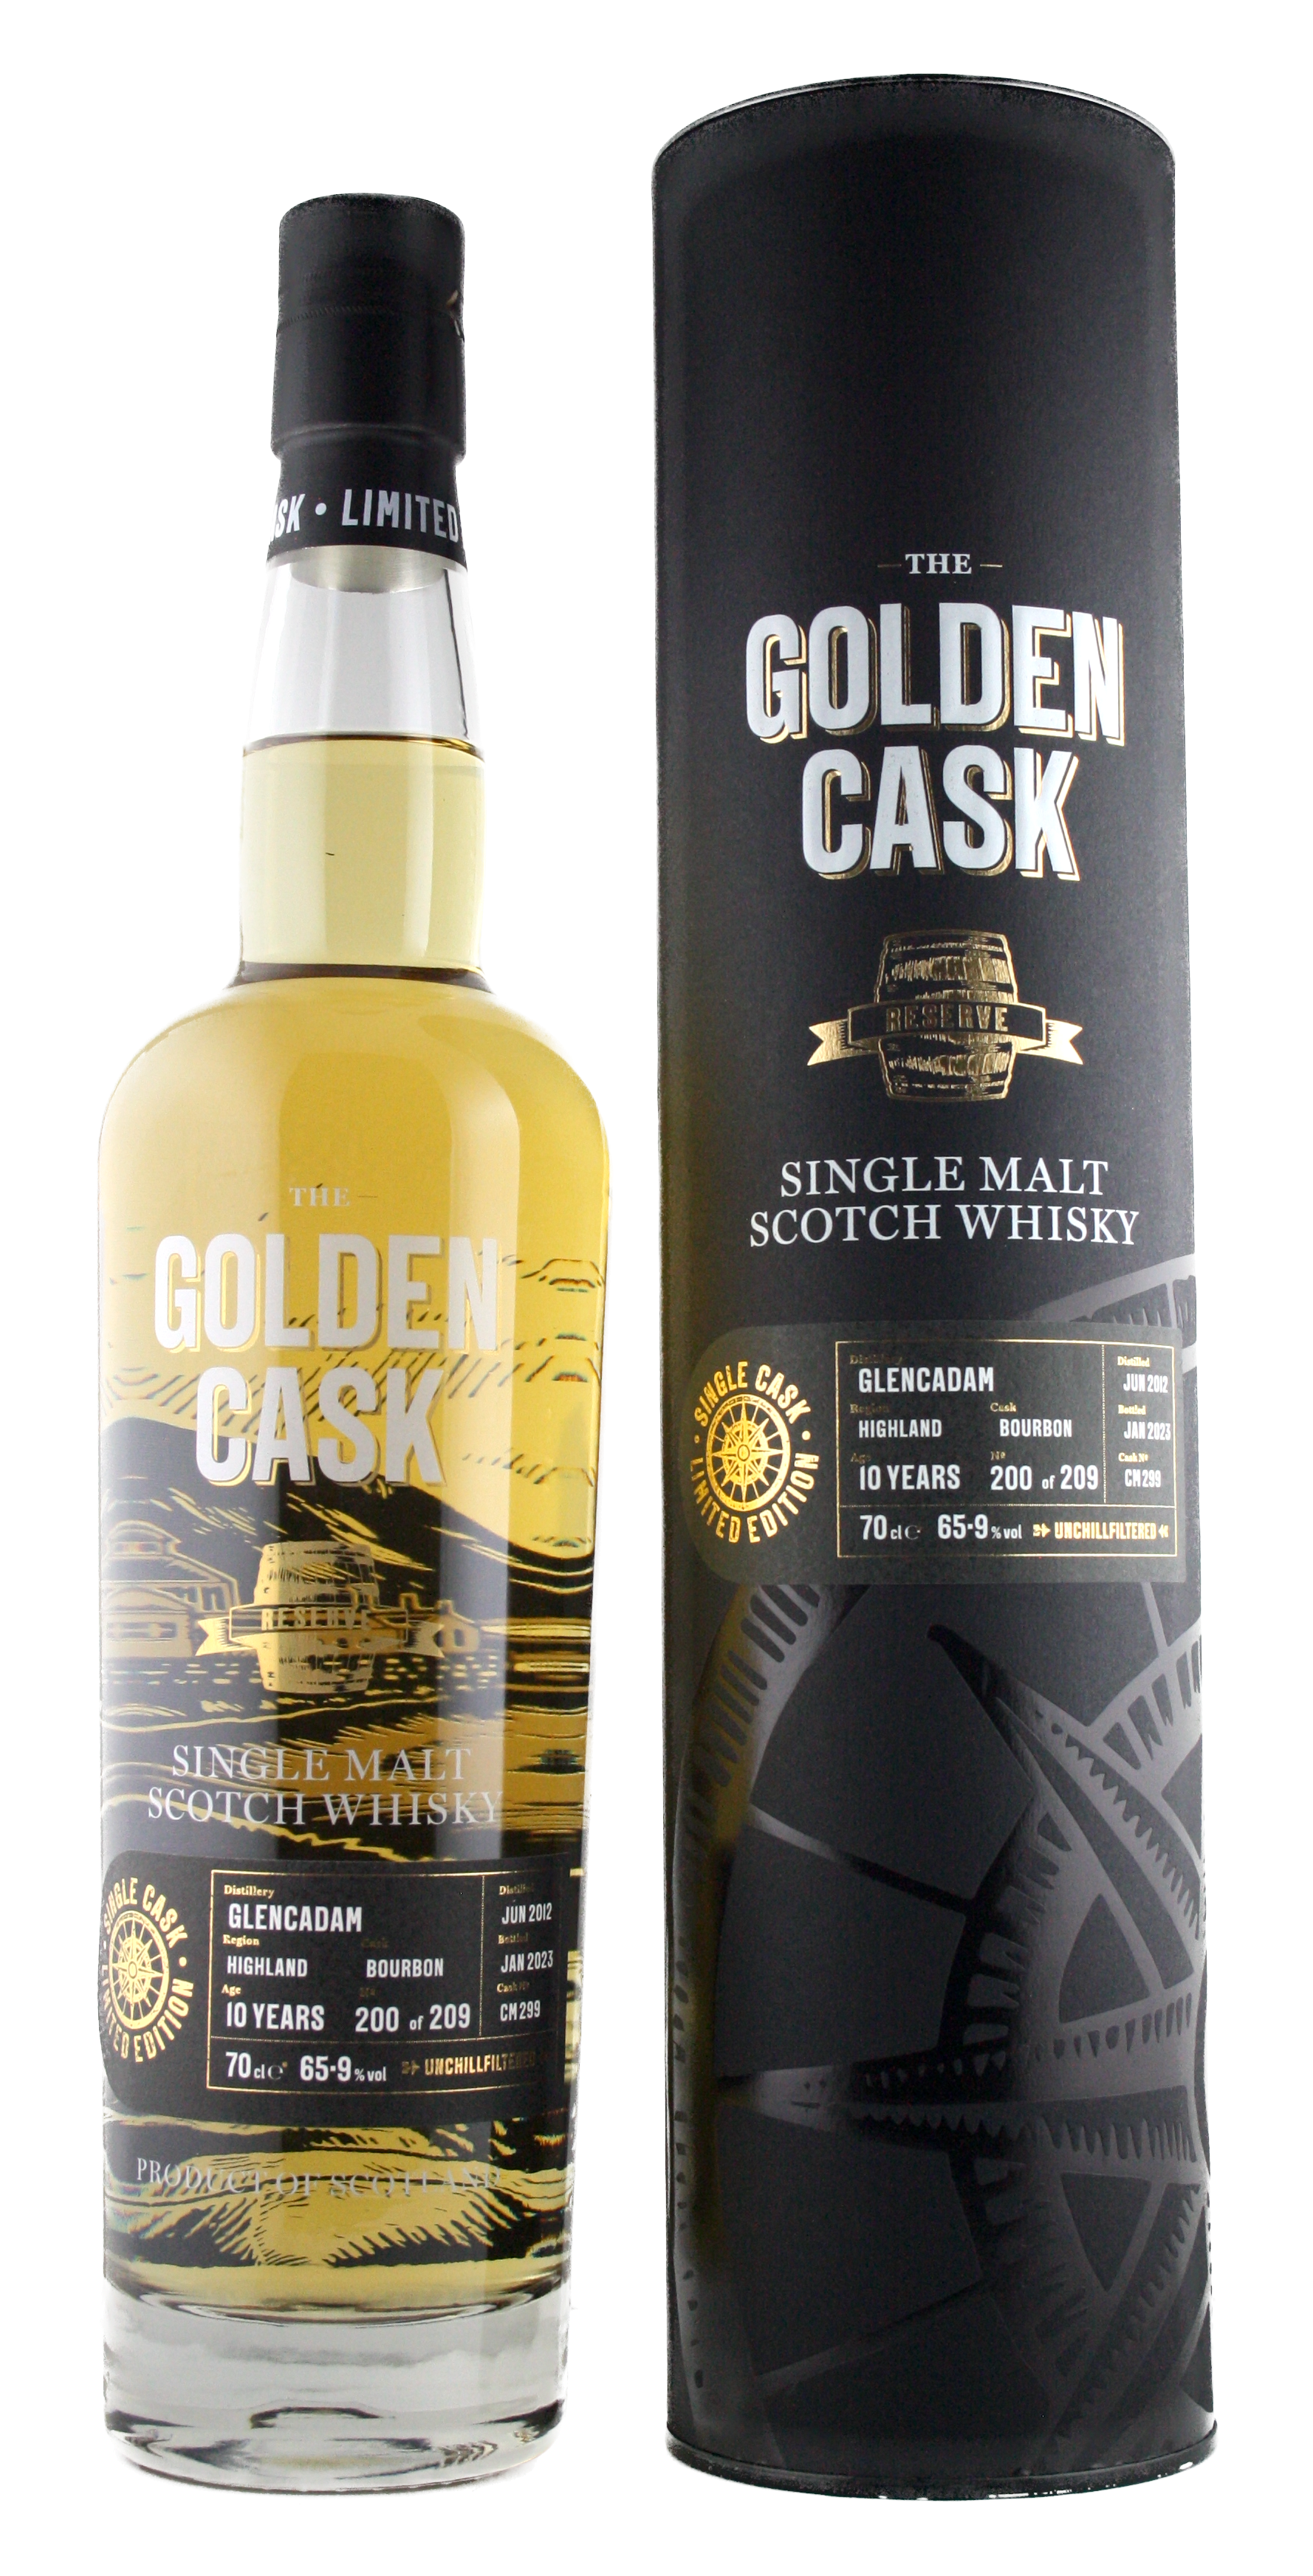 The Golden Cask Glencadam 10 Years